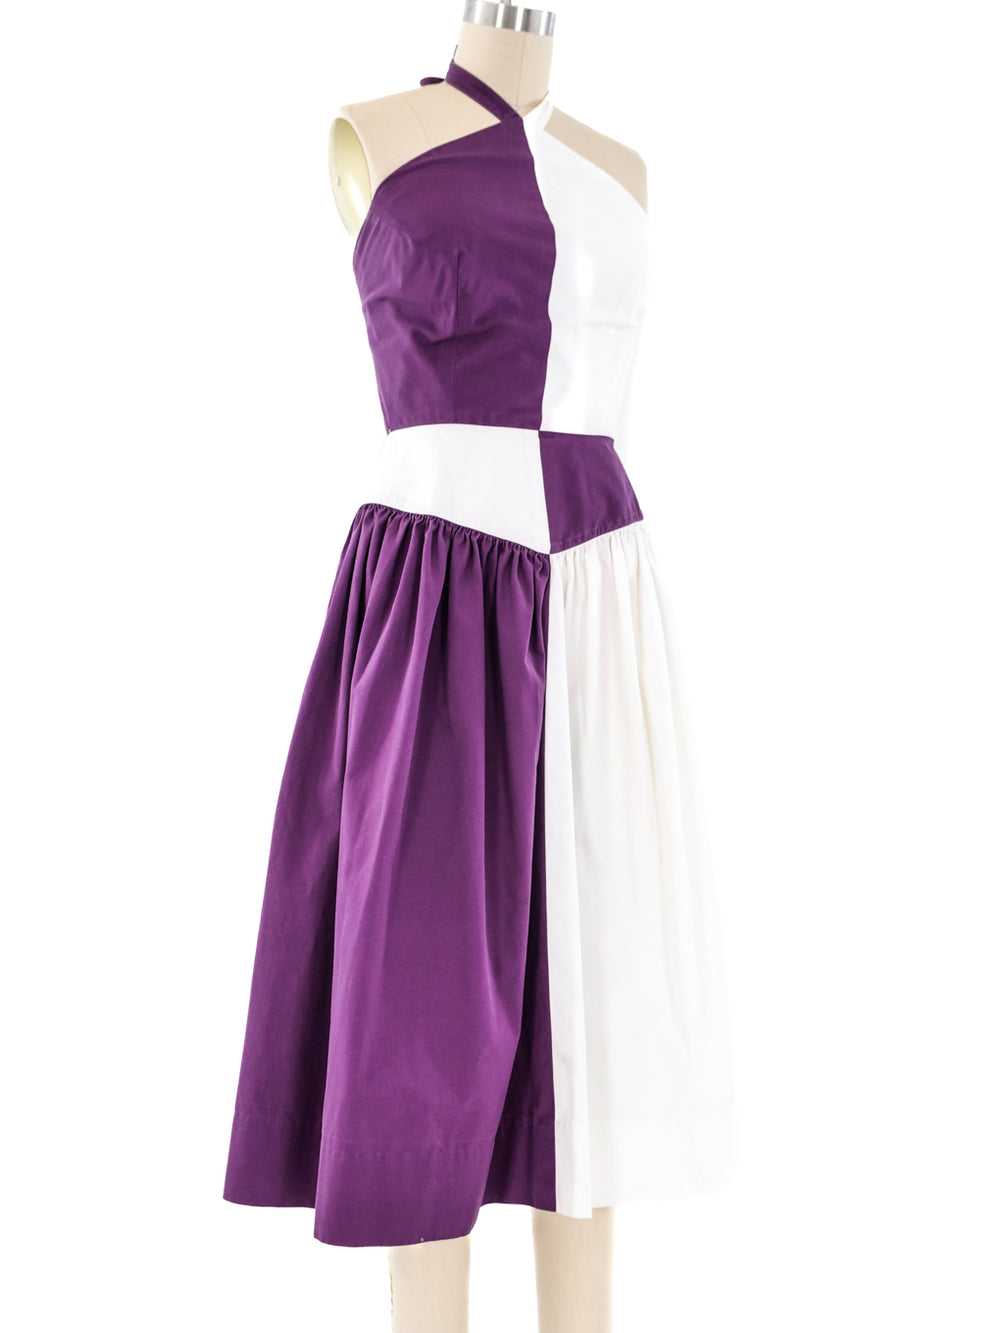 Adele Simpson Colorblock Halter Dress - image 2